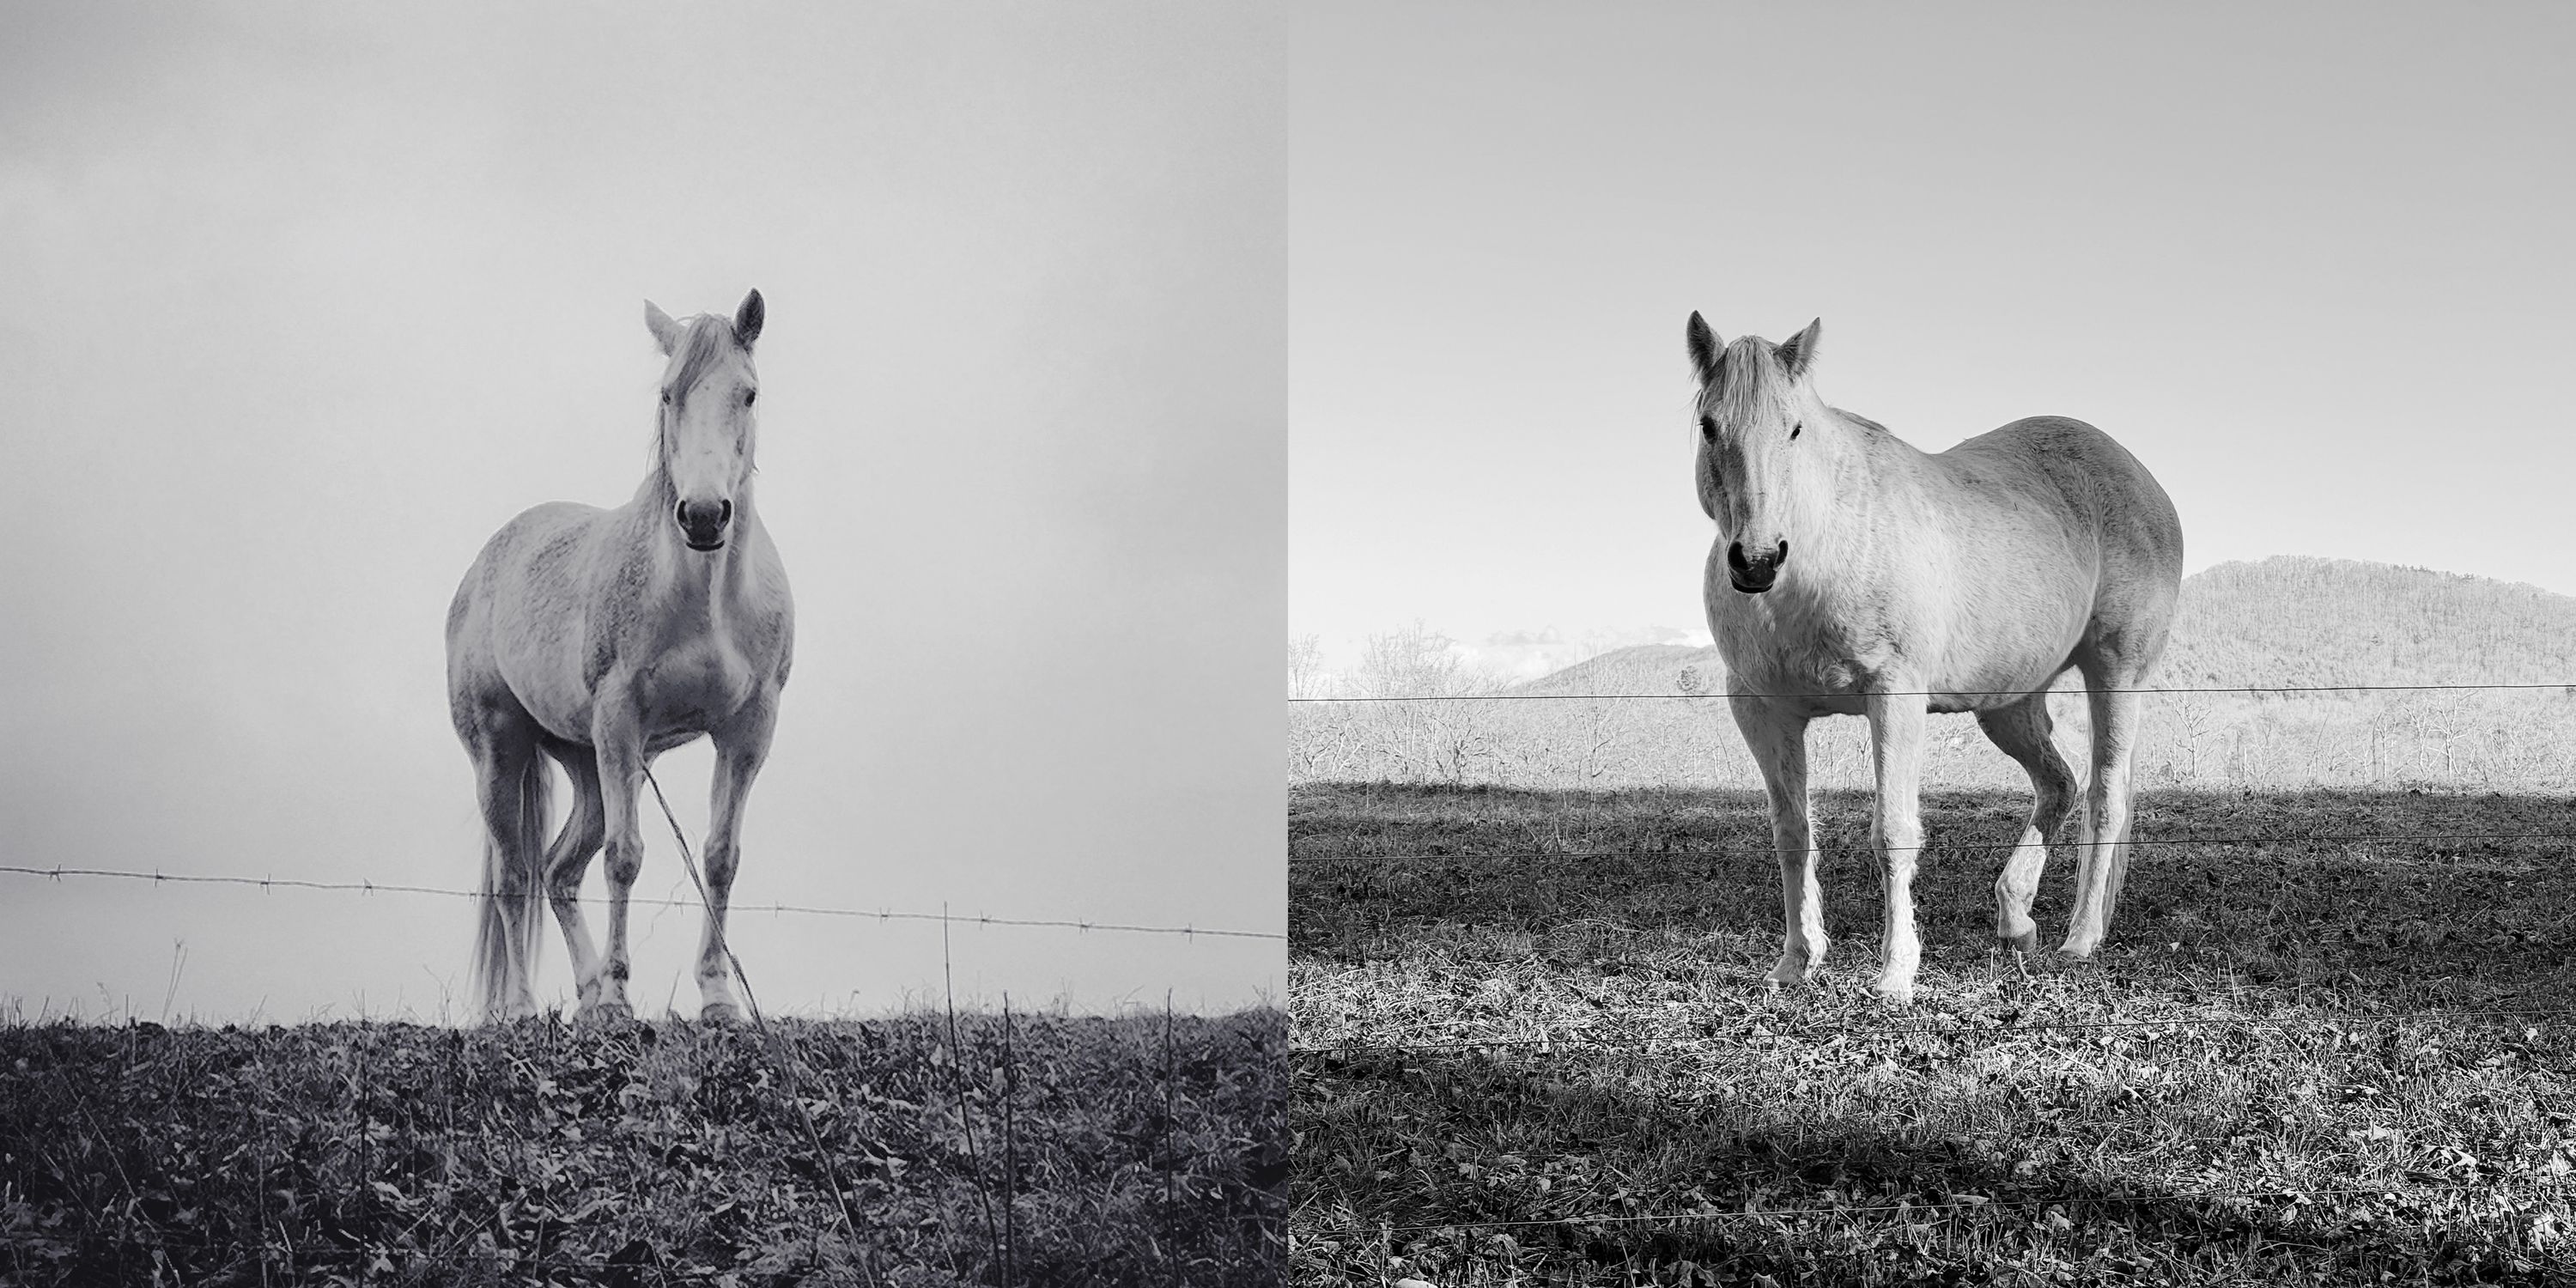 Horse; seven years between photos